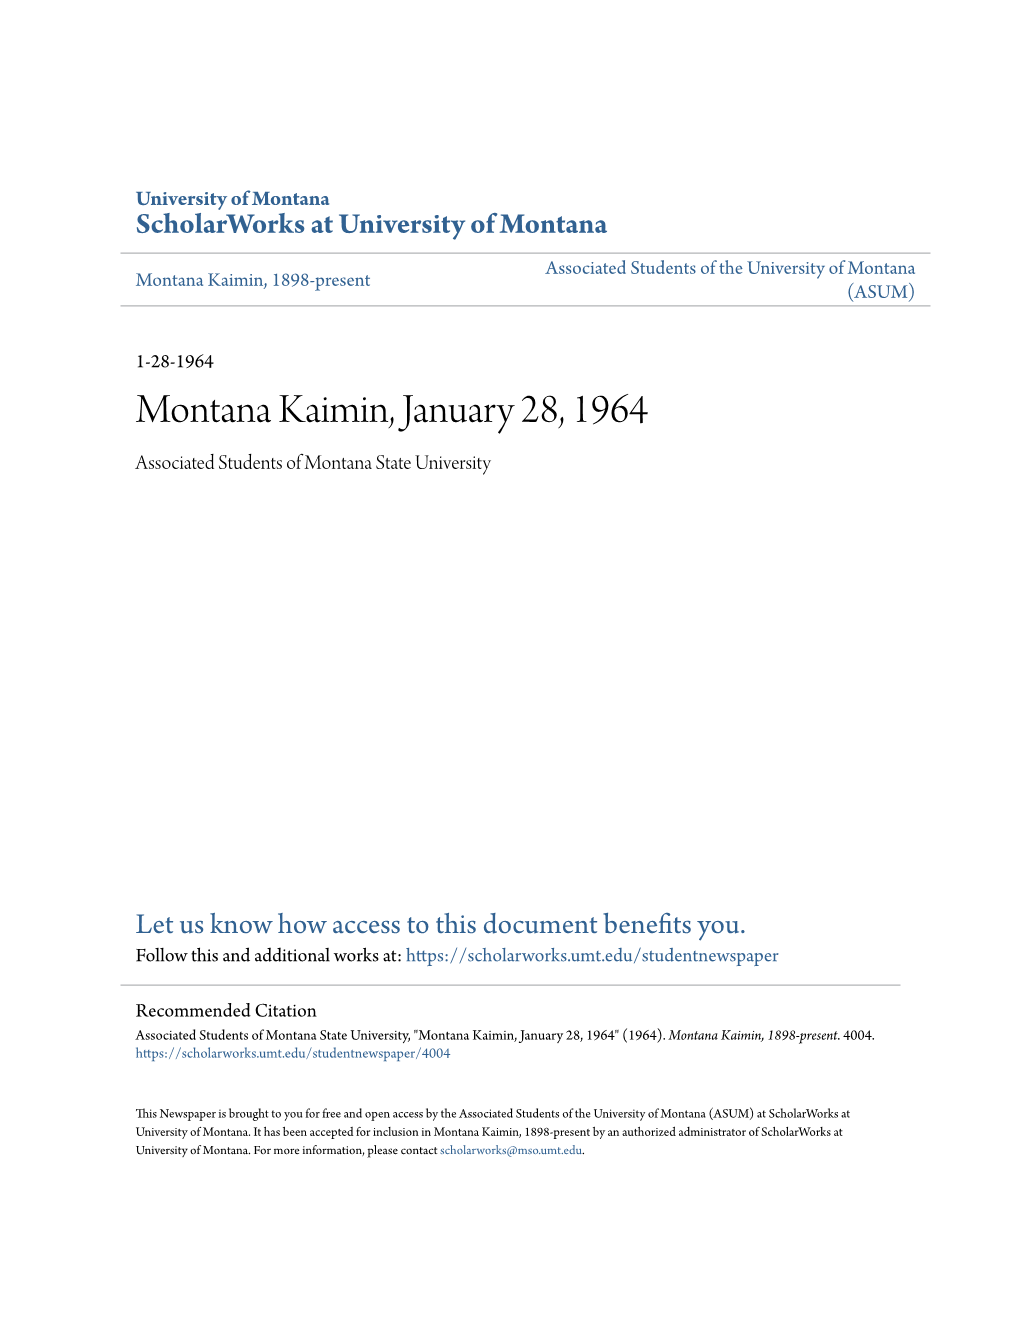 Montana Kaimin, January 28, 1964 Associated Students of Montana State University